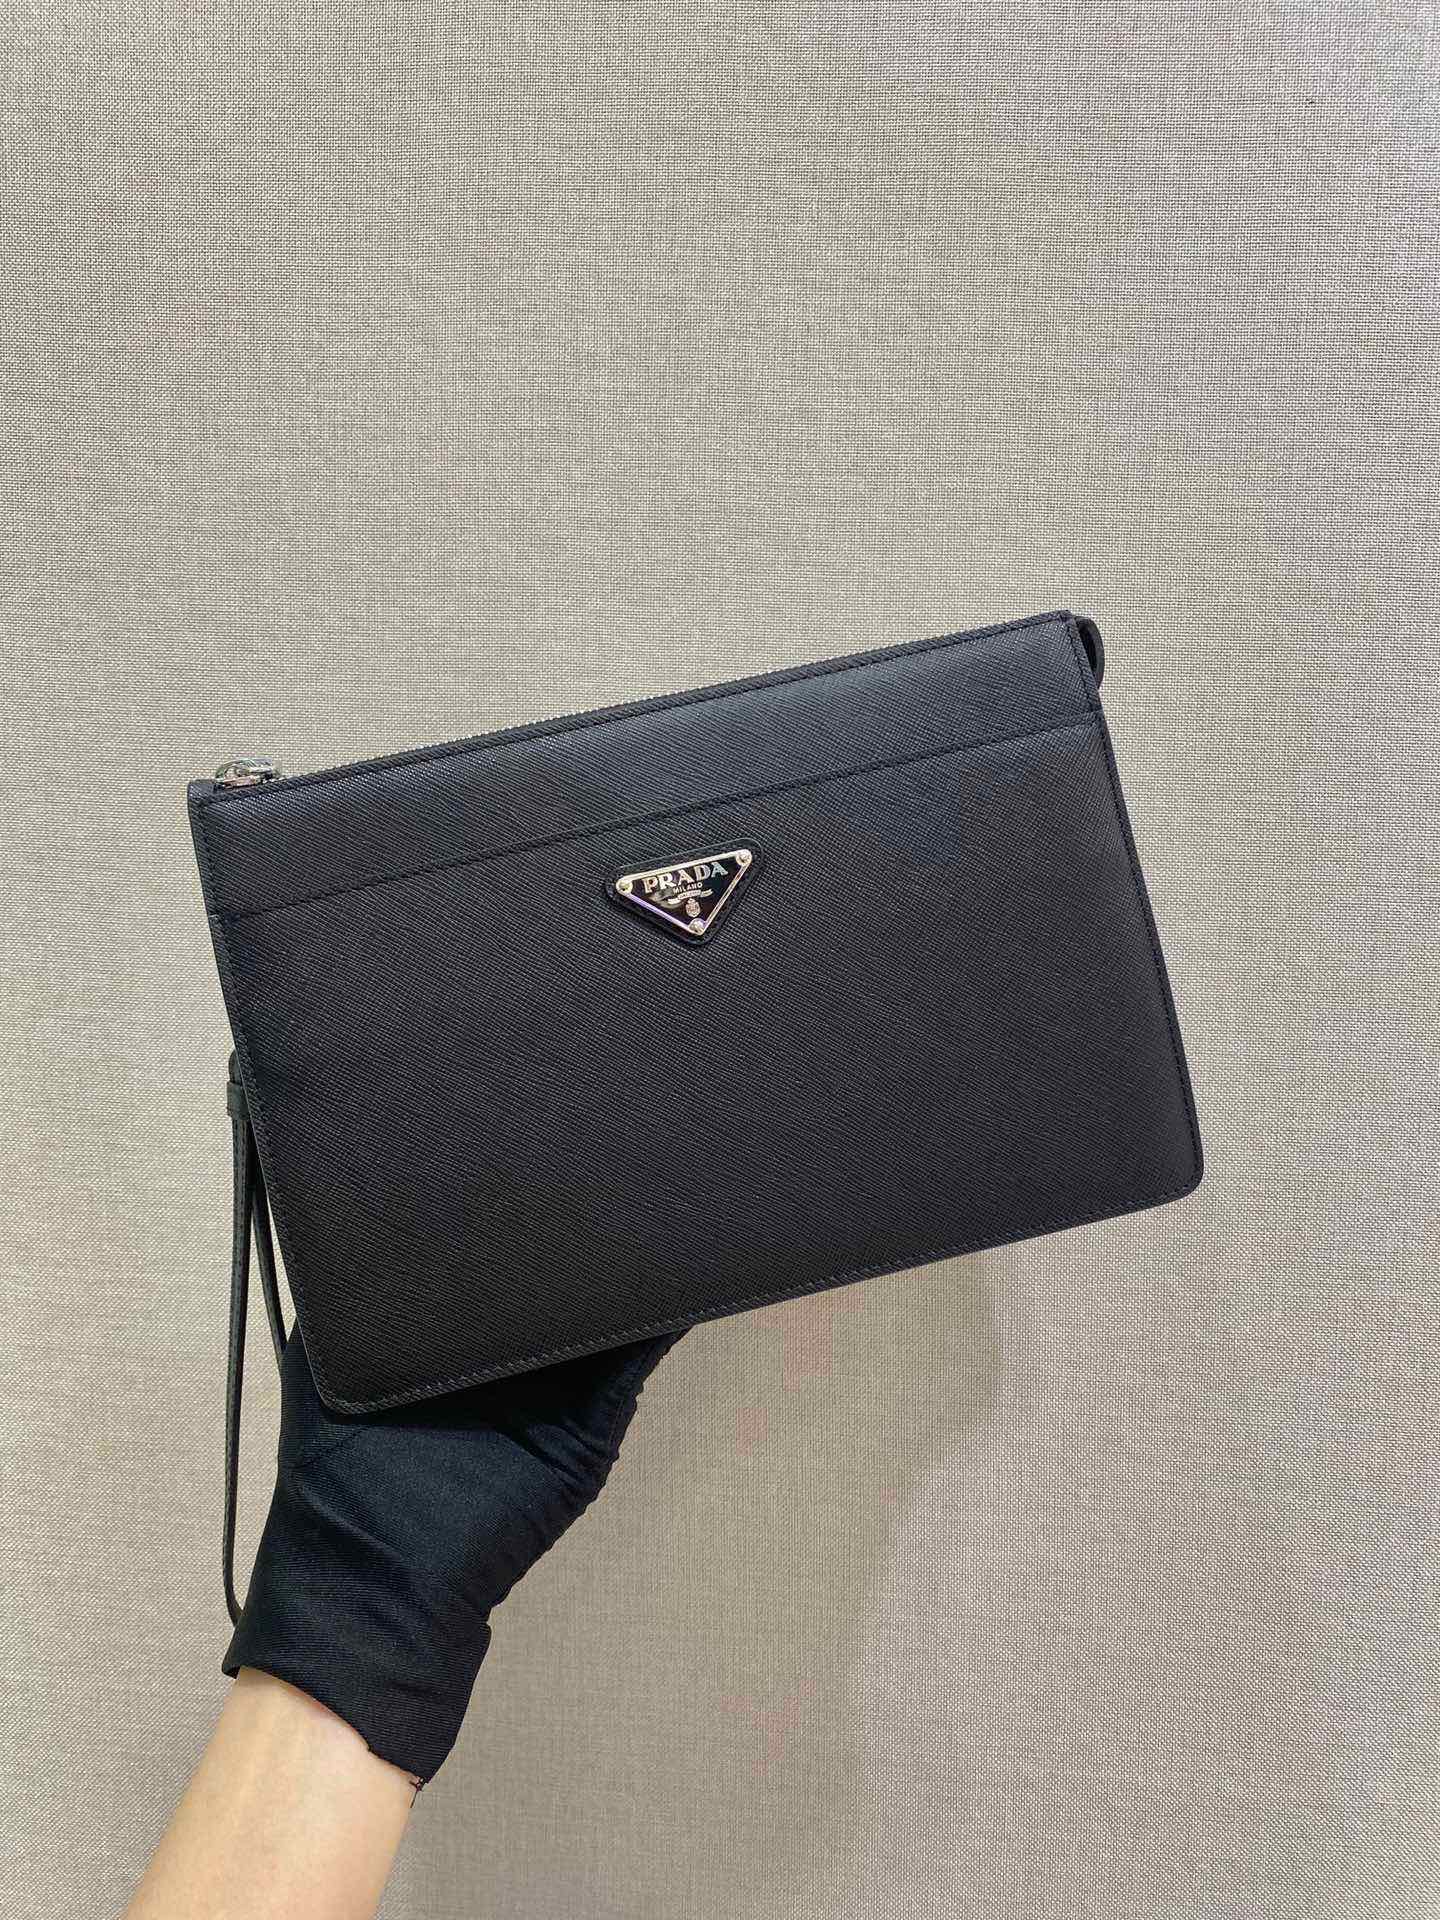 Prada Handbags Clutches & Pouch Bags Men Saffiano Leather Fashion